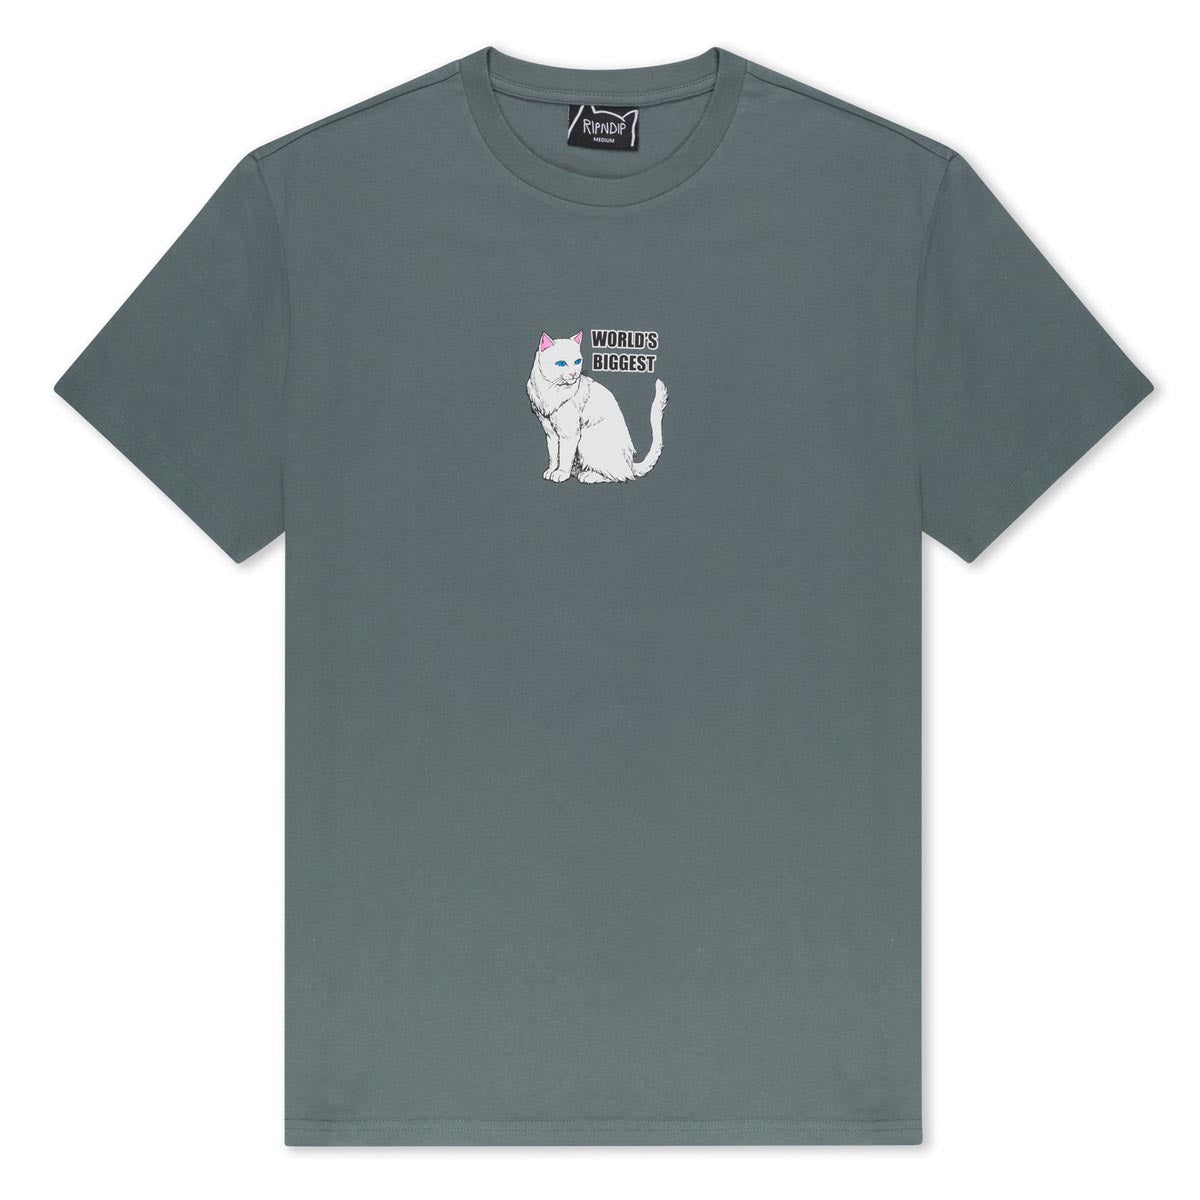 RIPNDIP World's Biggest T-Shirt - Charcoal image 1